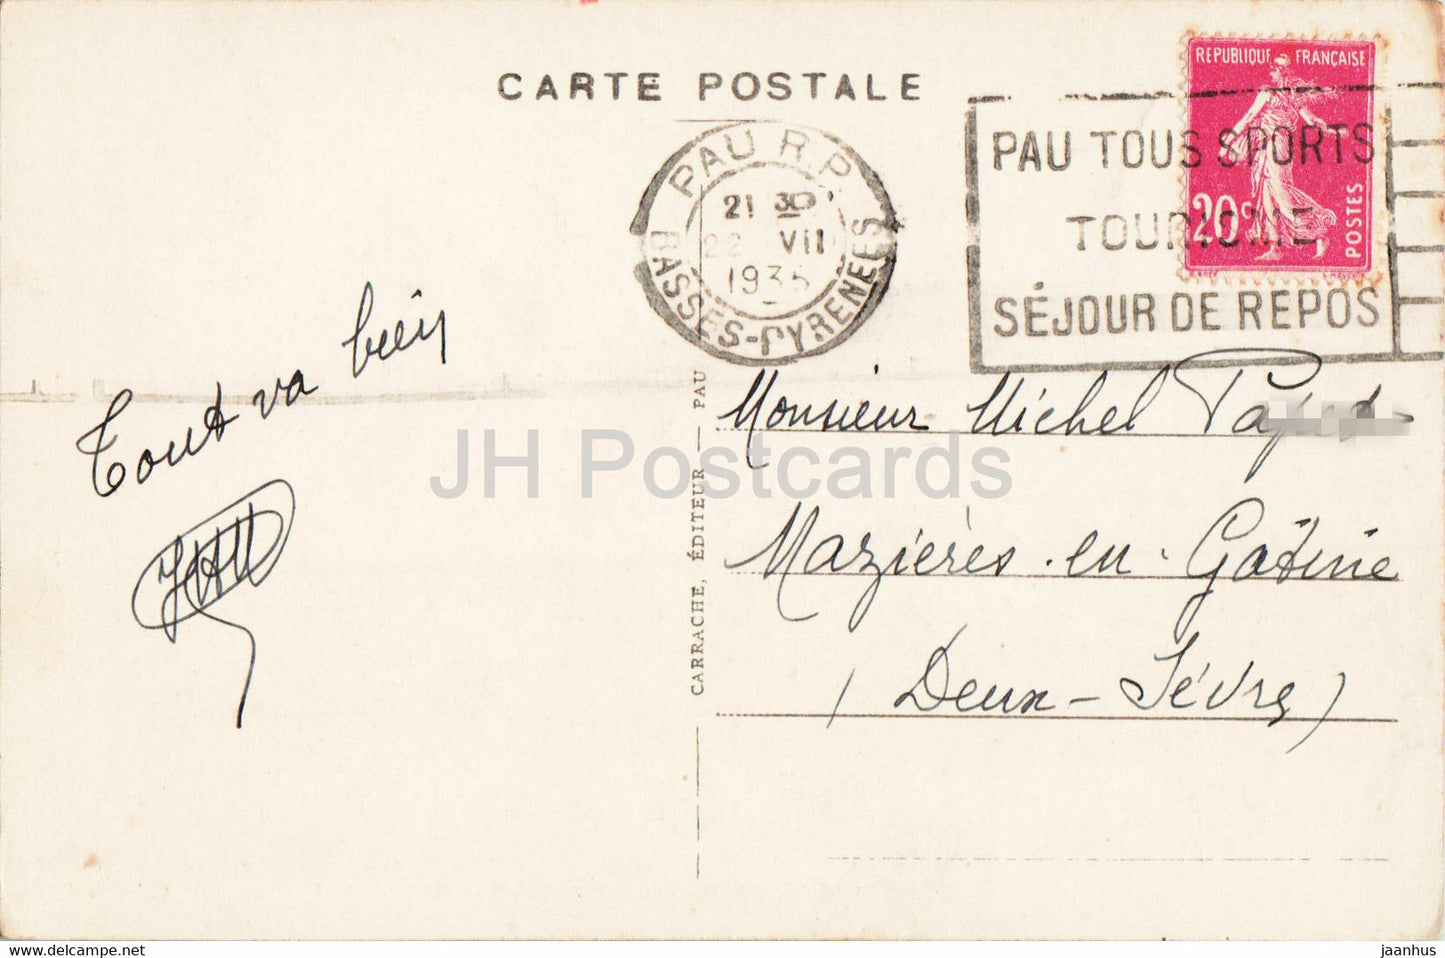 Pau - Le Chateau - Façade Principale - 1 - château - carte postale ancienne - 1935 - France - occasion